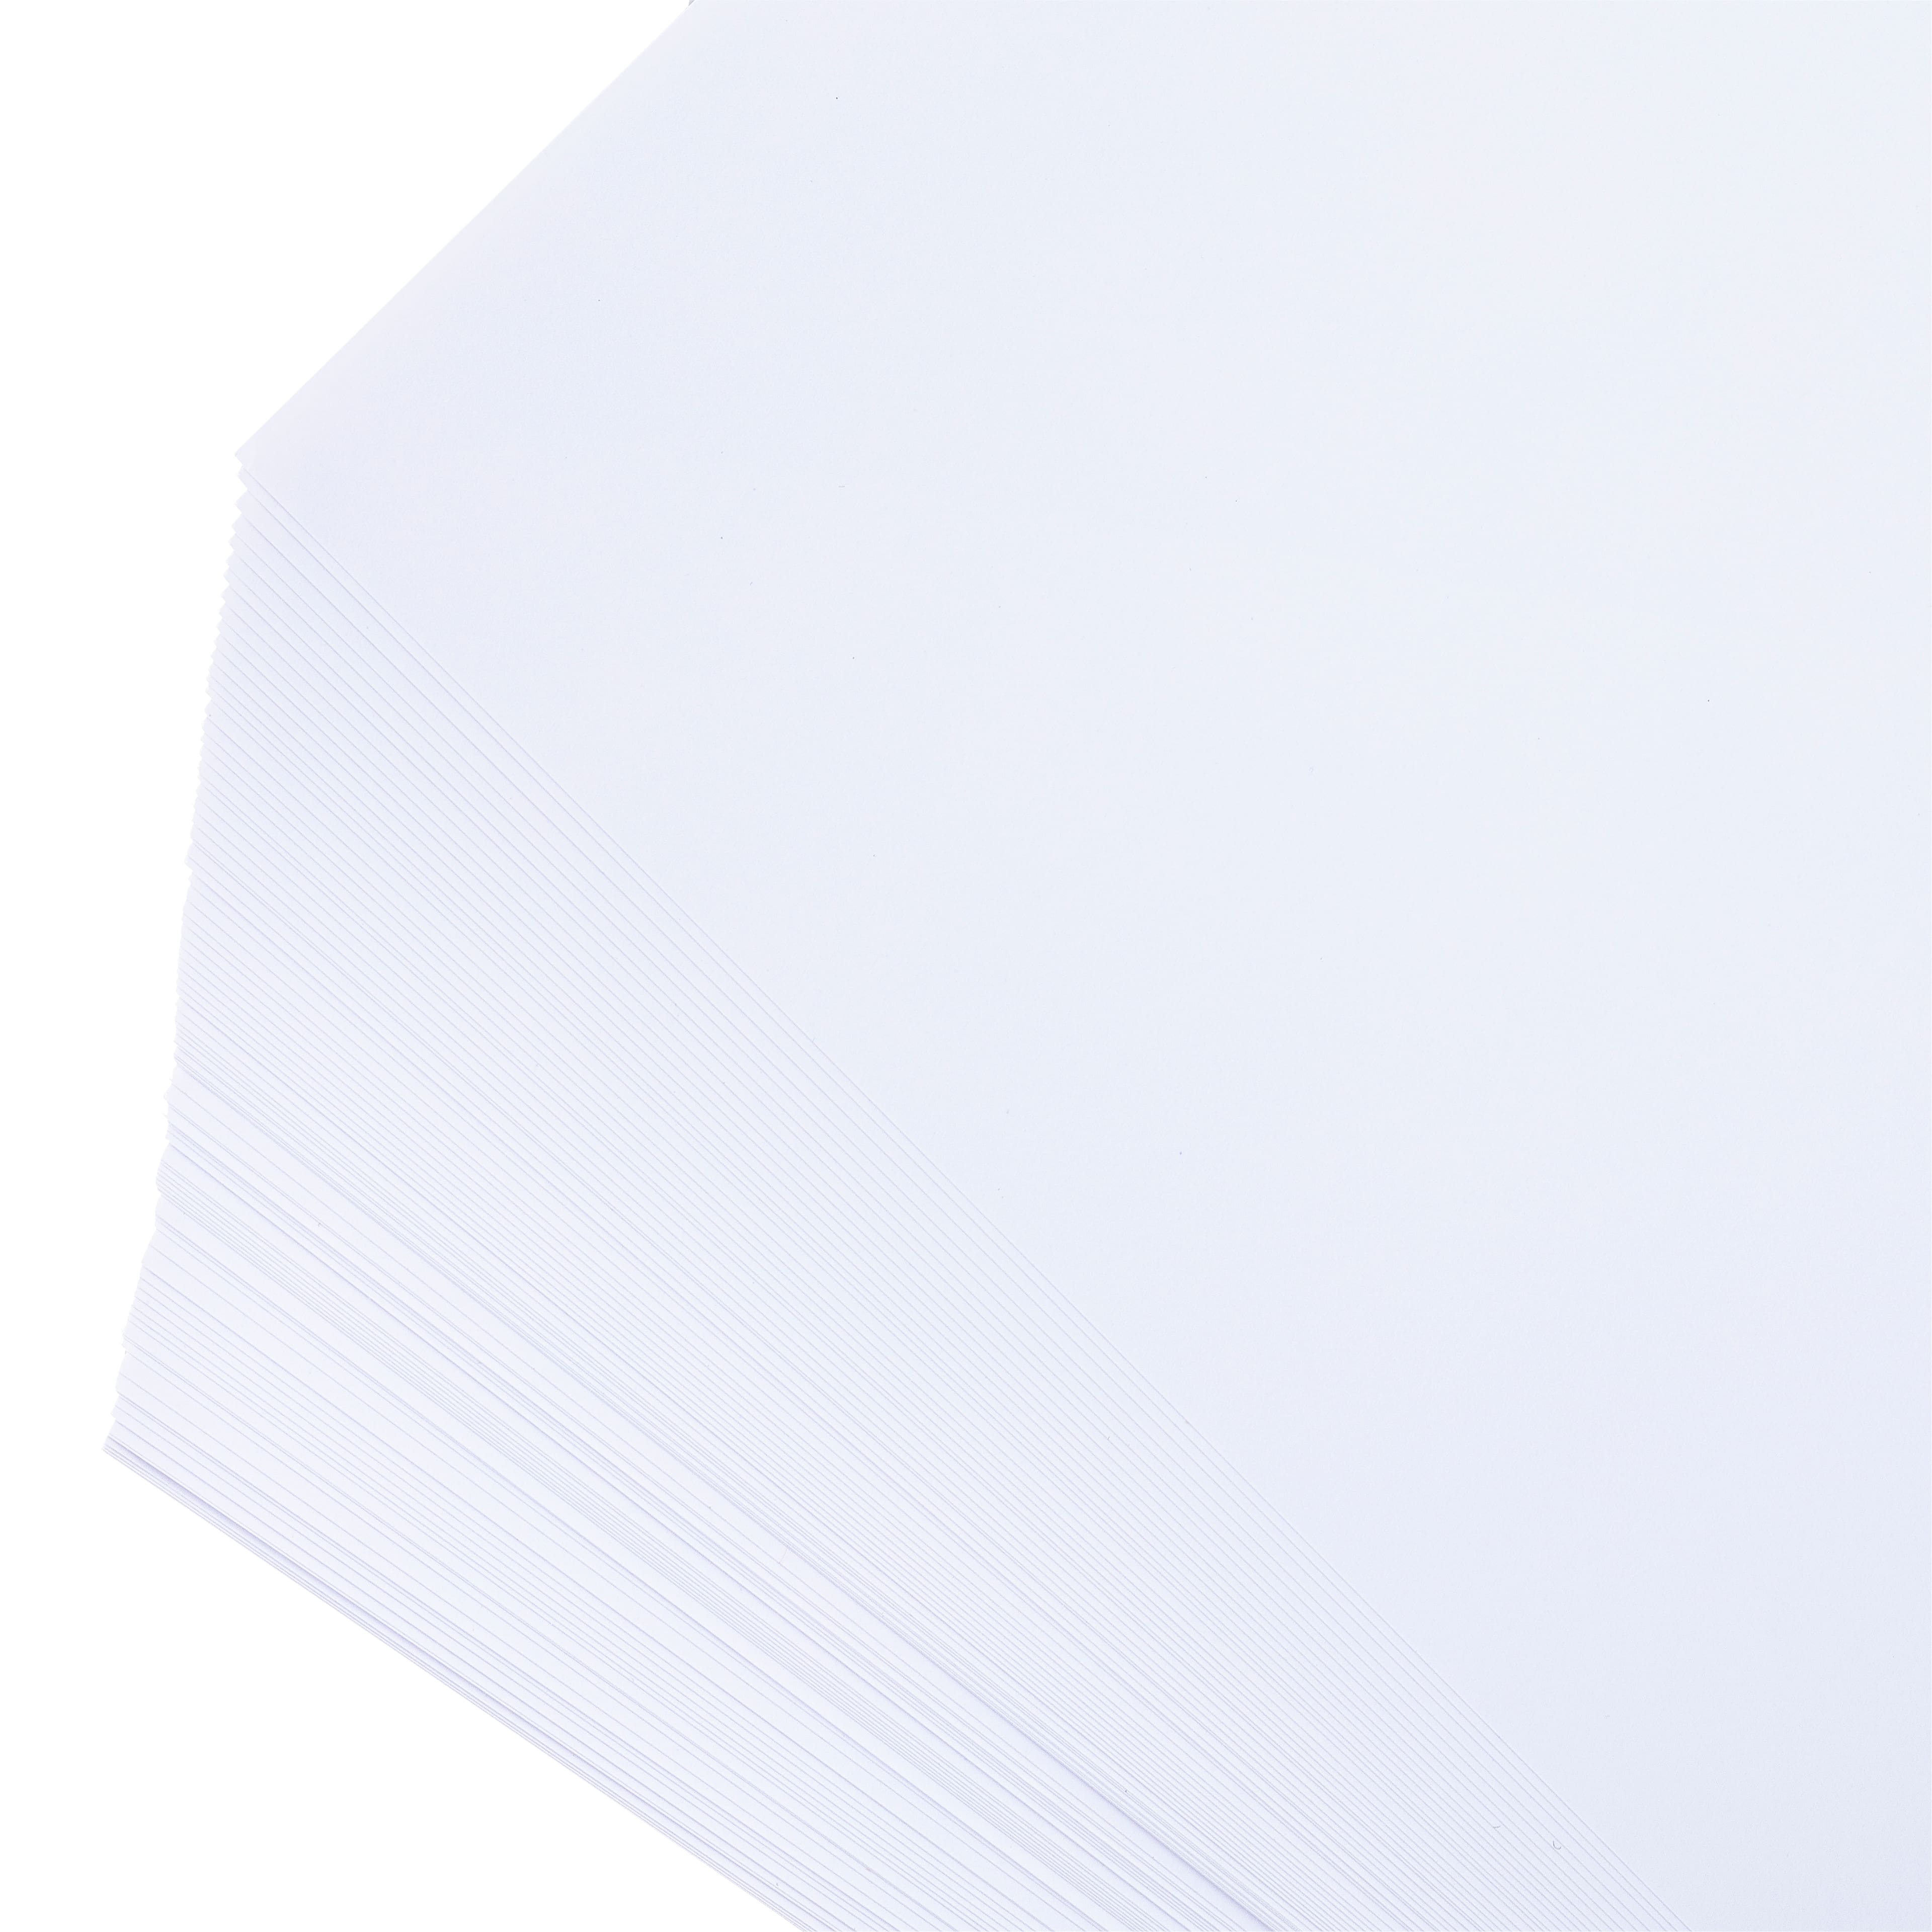 Sawgrass Sublimation Paper TRUEPIX A3 PAPER 80 GR 100 Sheets – lawazen